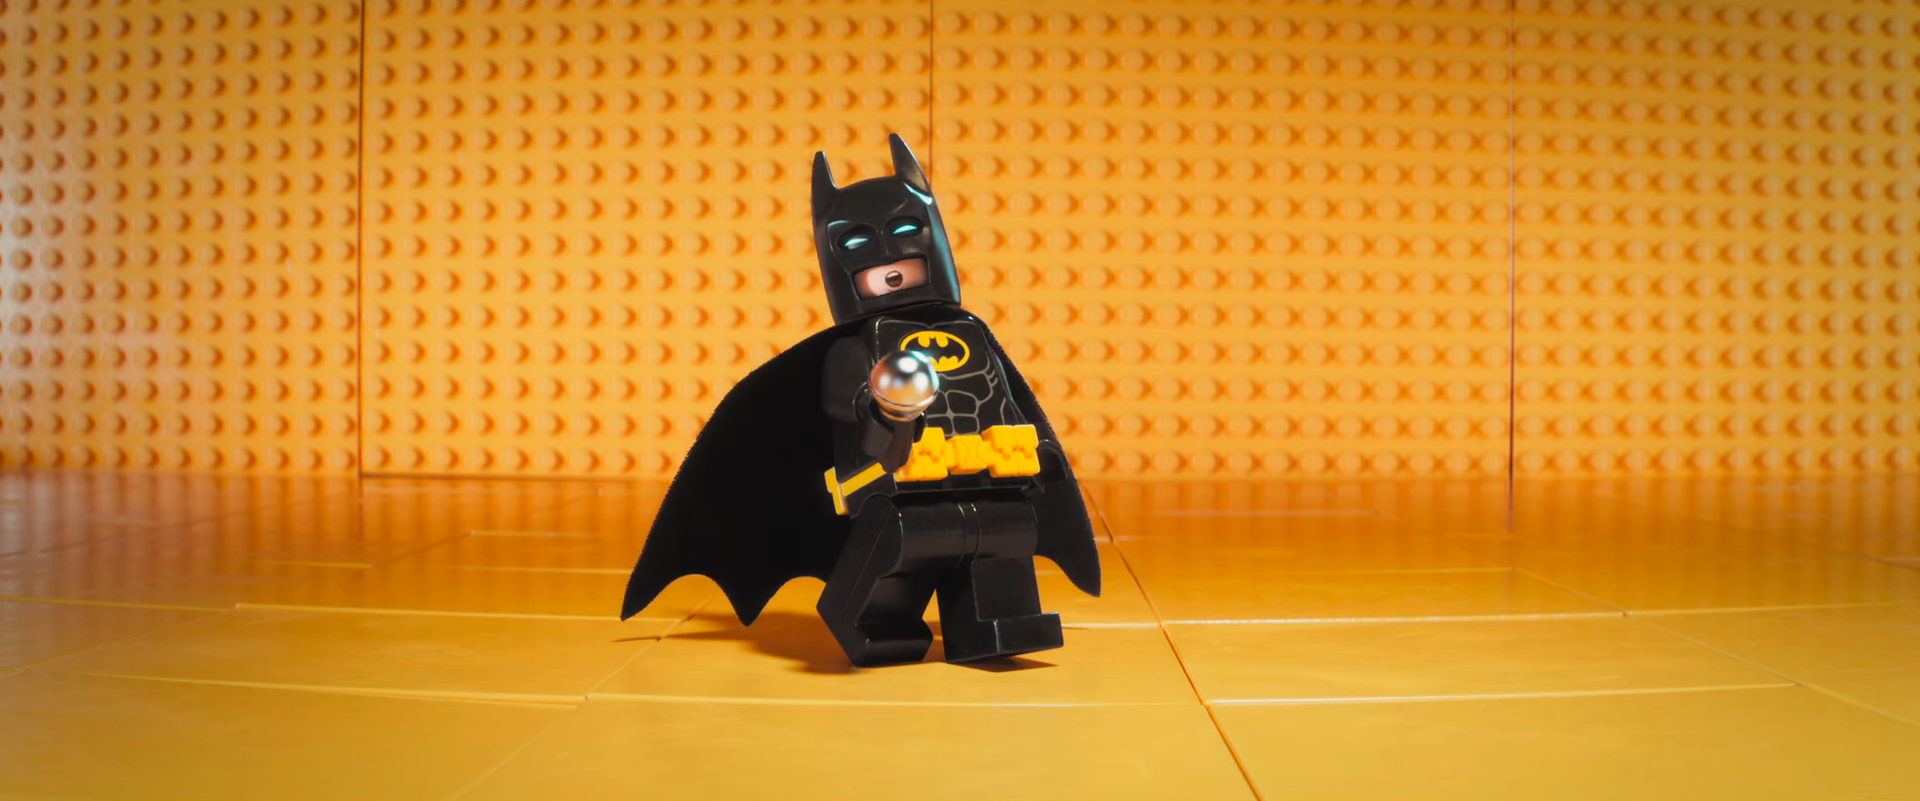 The Lego Batman Movie' trailer promises more colorful fun than